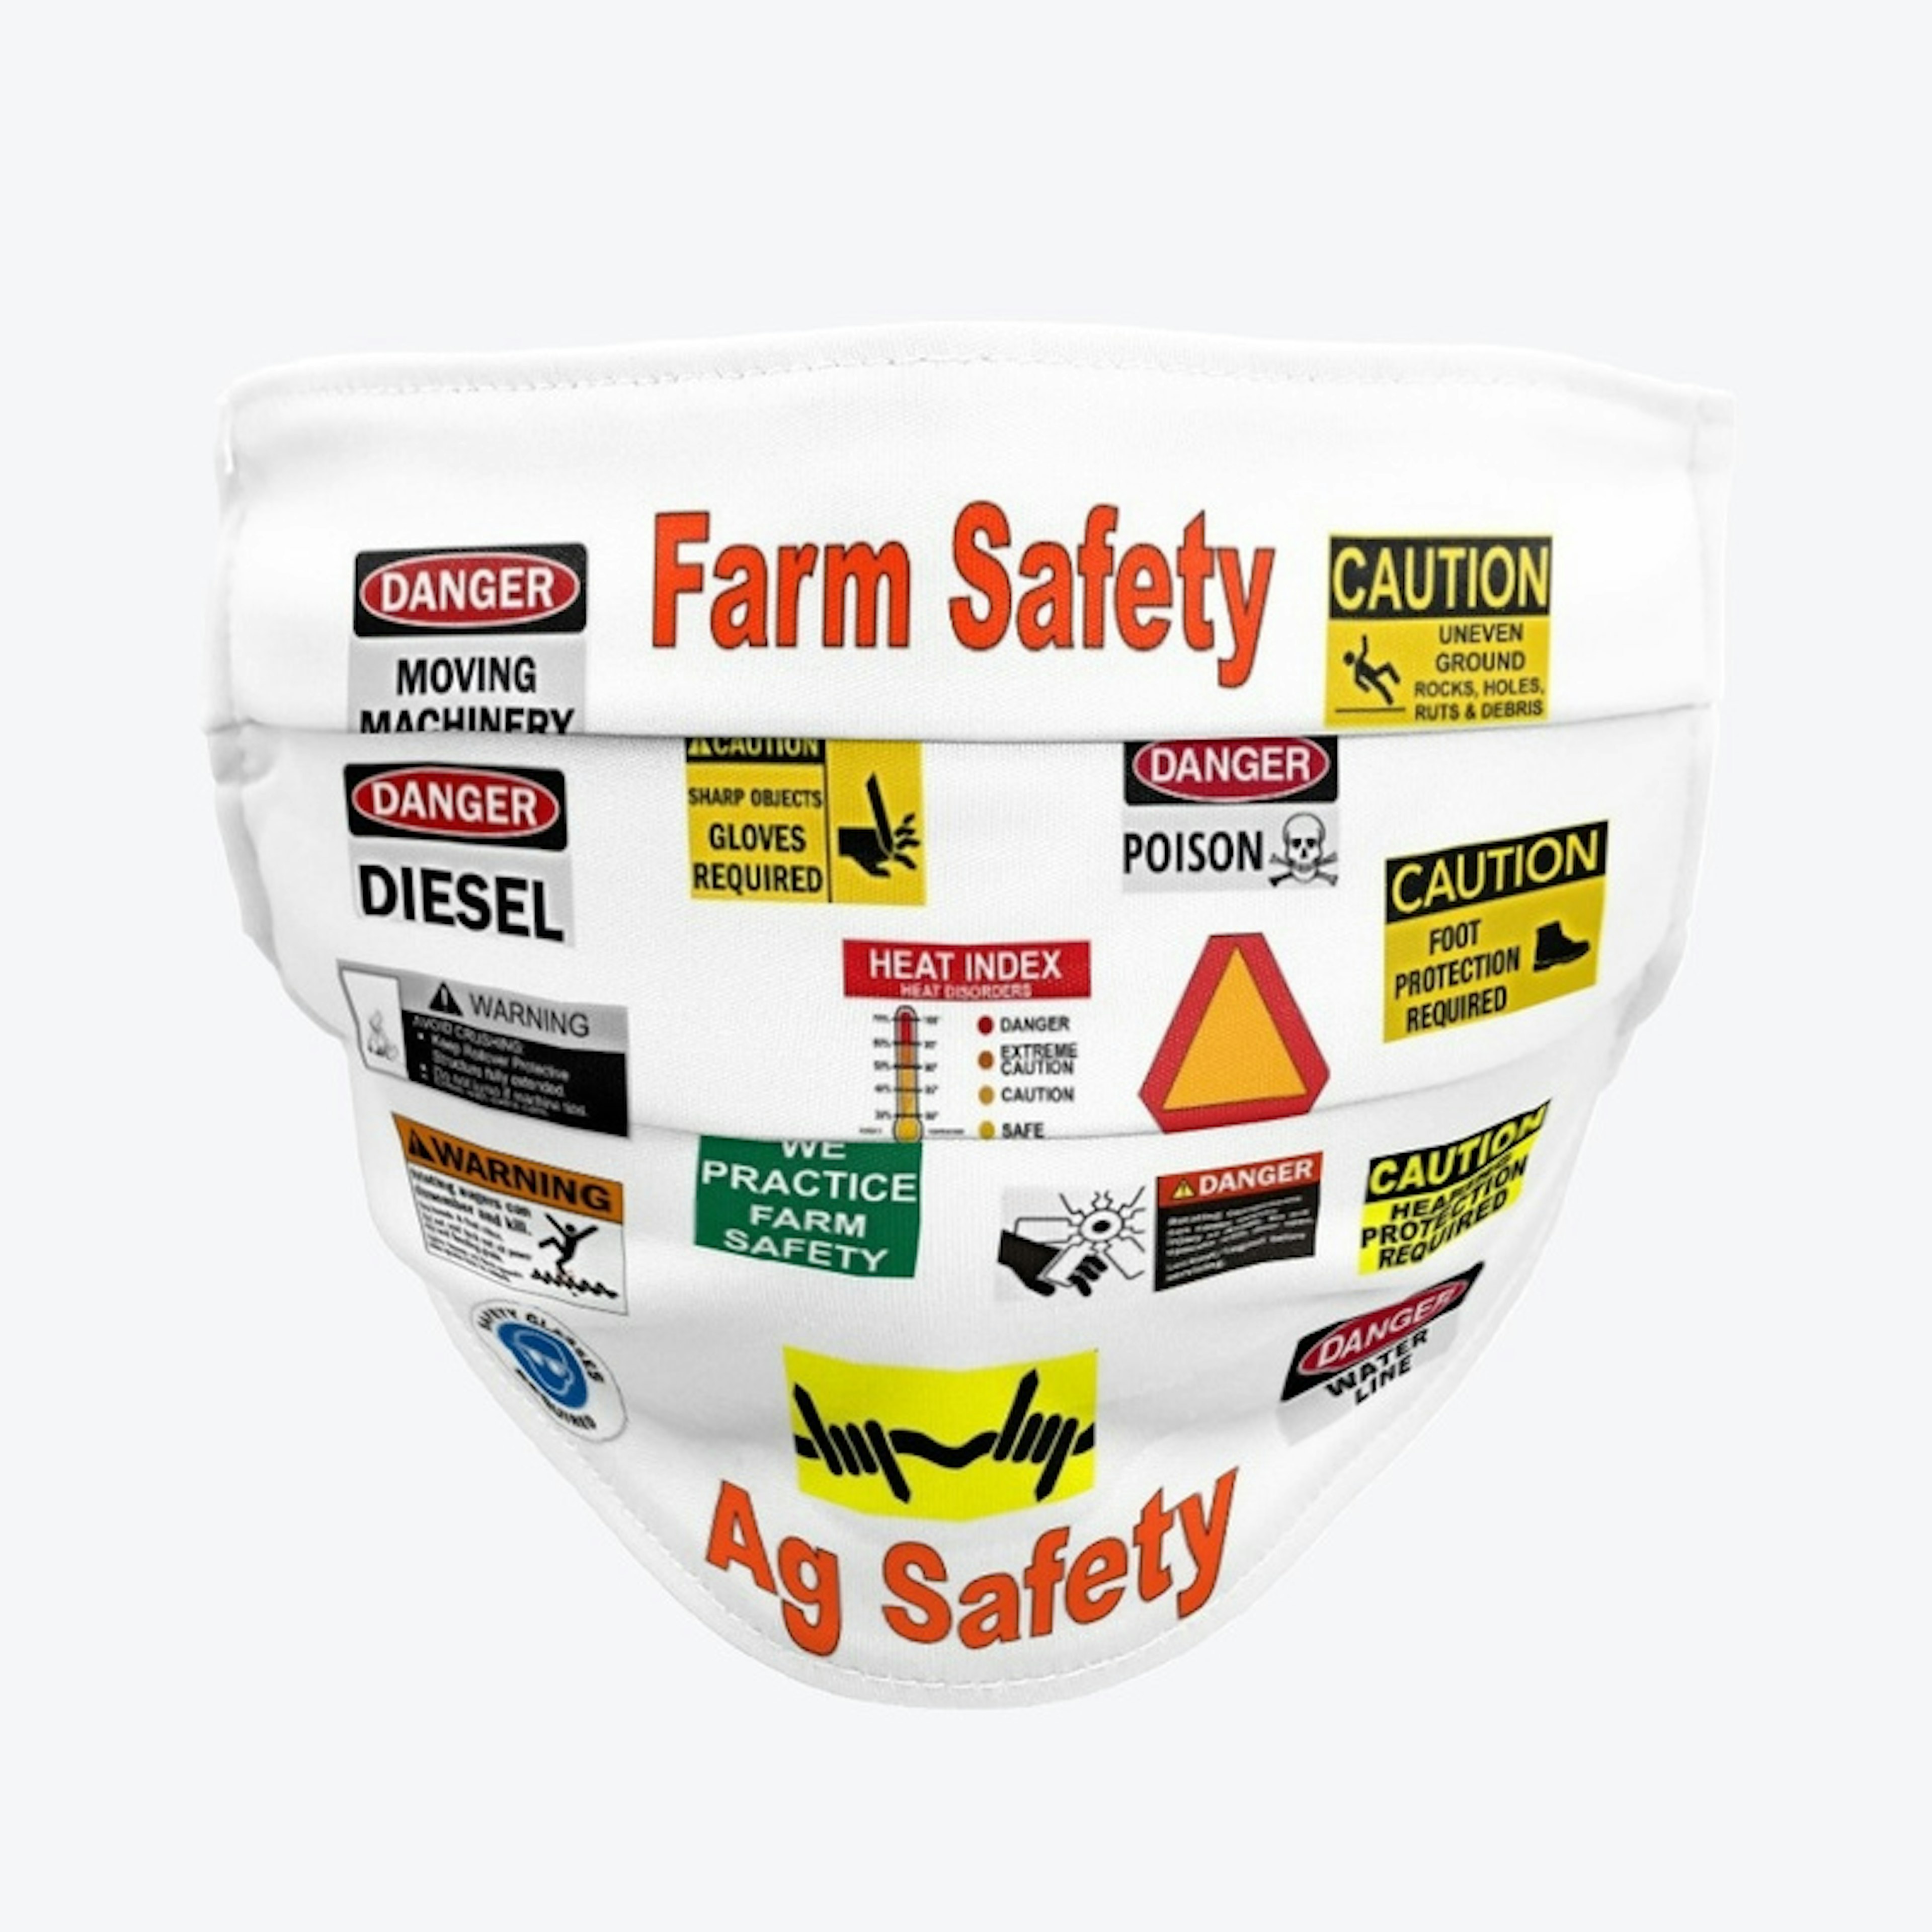 Ag Safety  Farm Safety